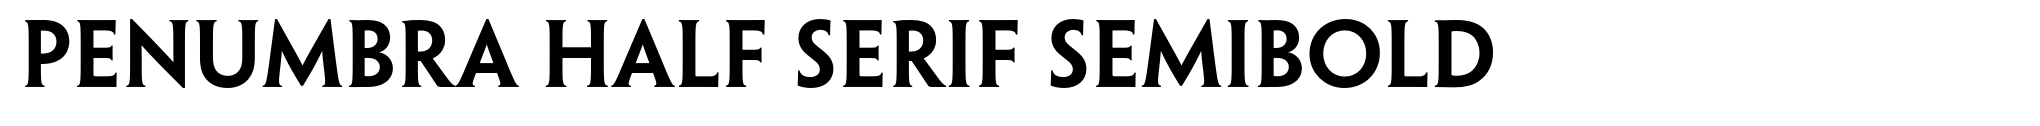 Penumbra Half Serif SemiBold image